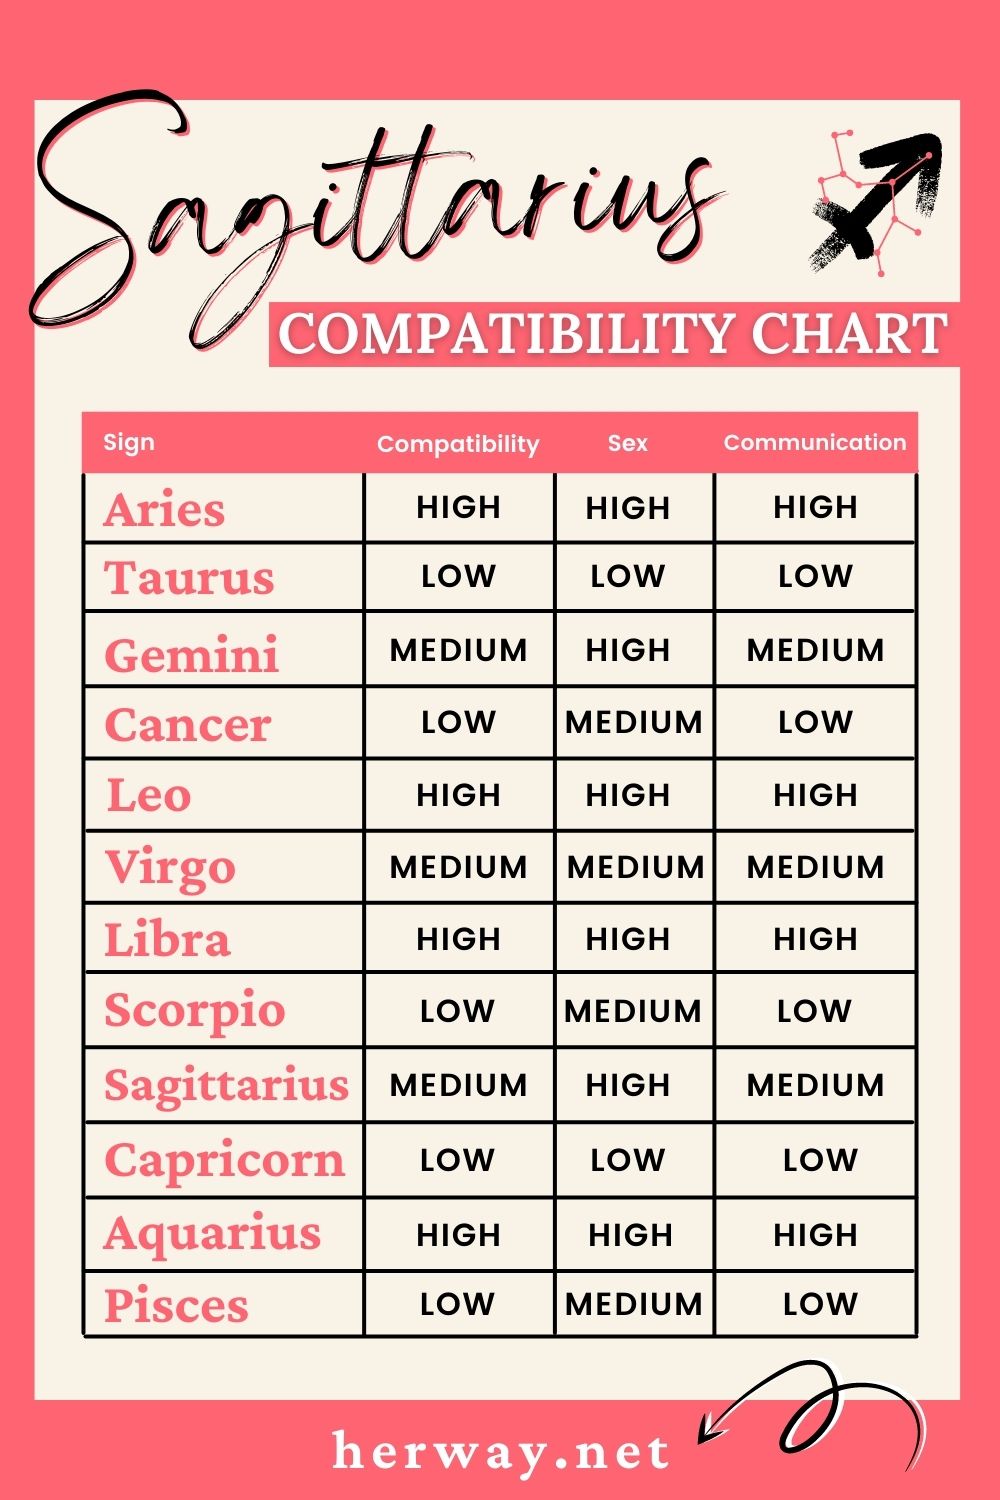 Sagittarius compatibility chart 